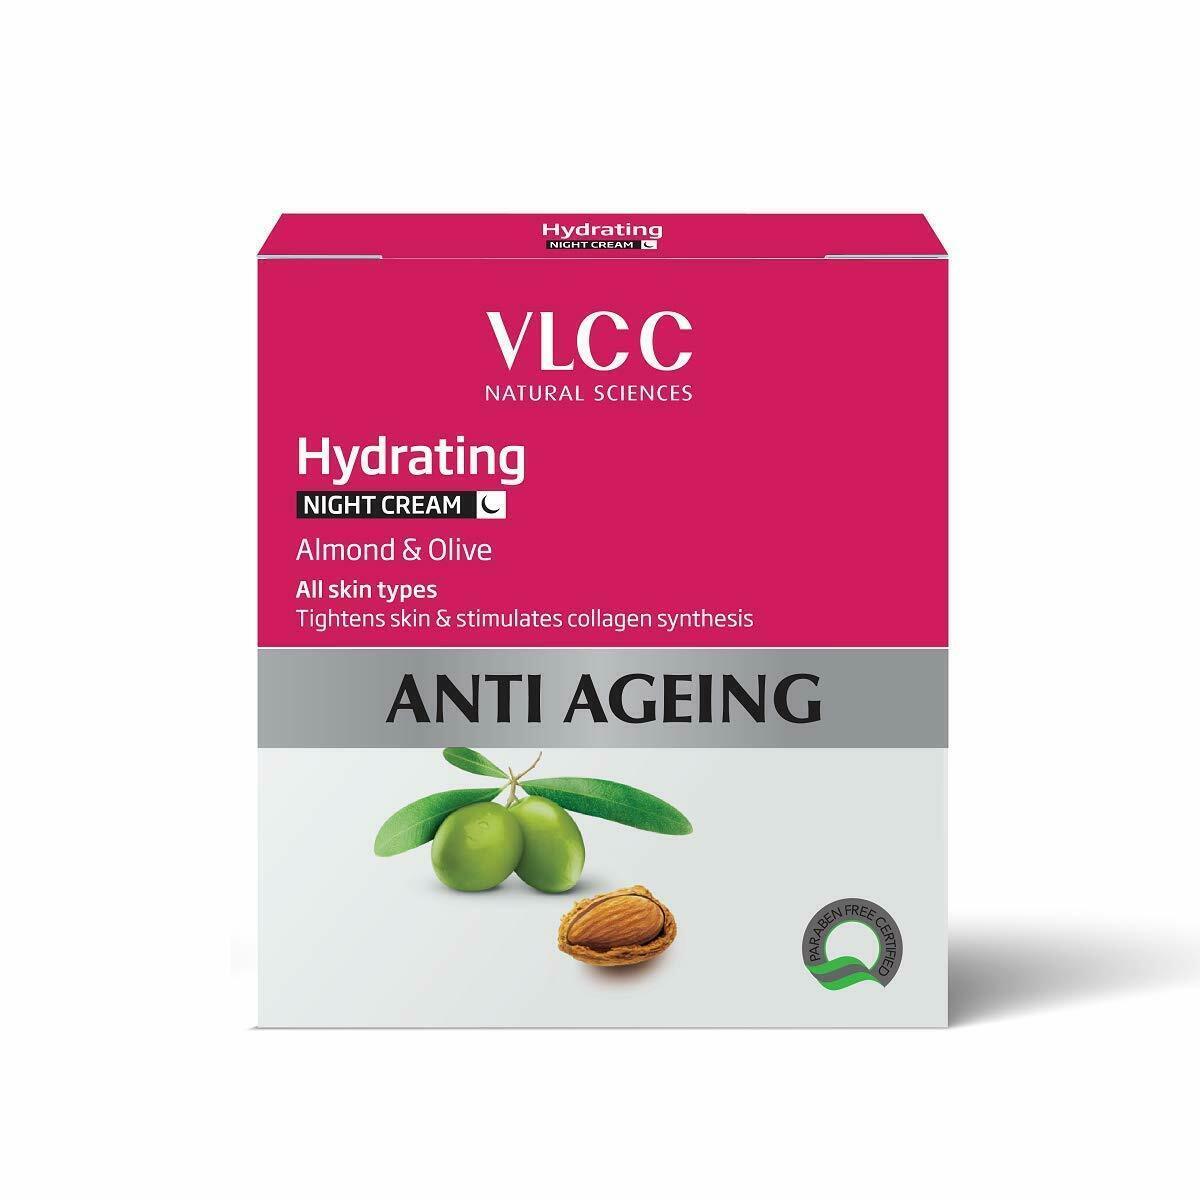 VLCC Hydrating Anti-Ageing Night Cream, 50g